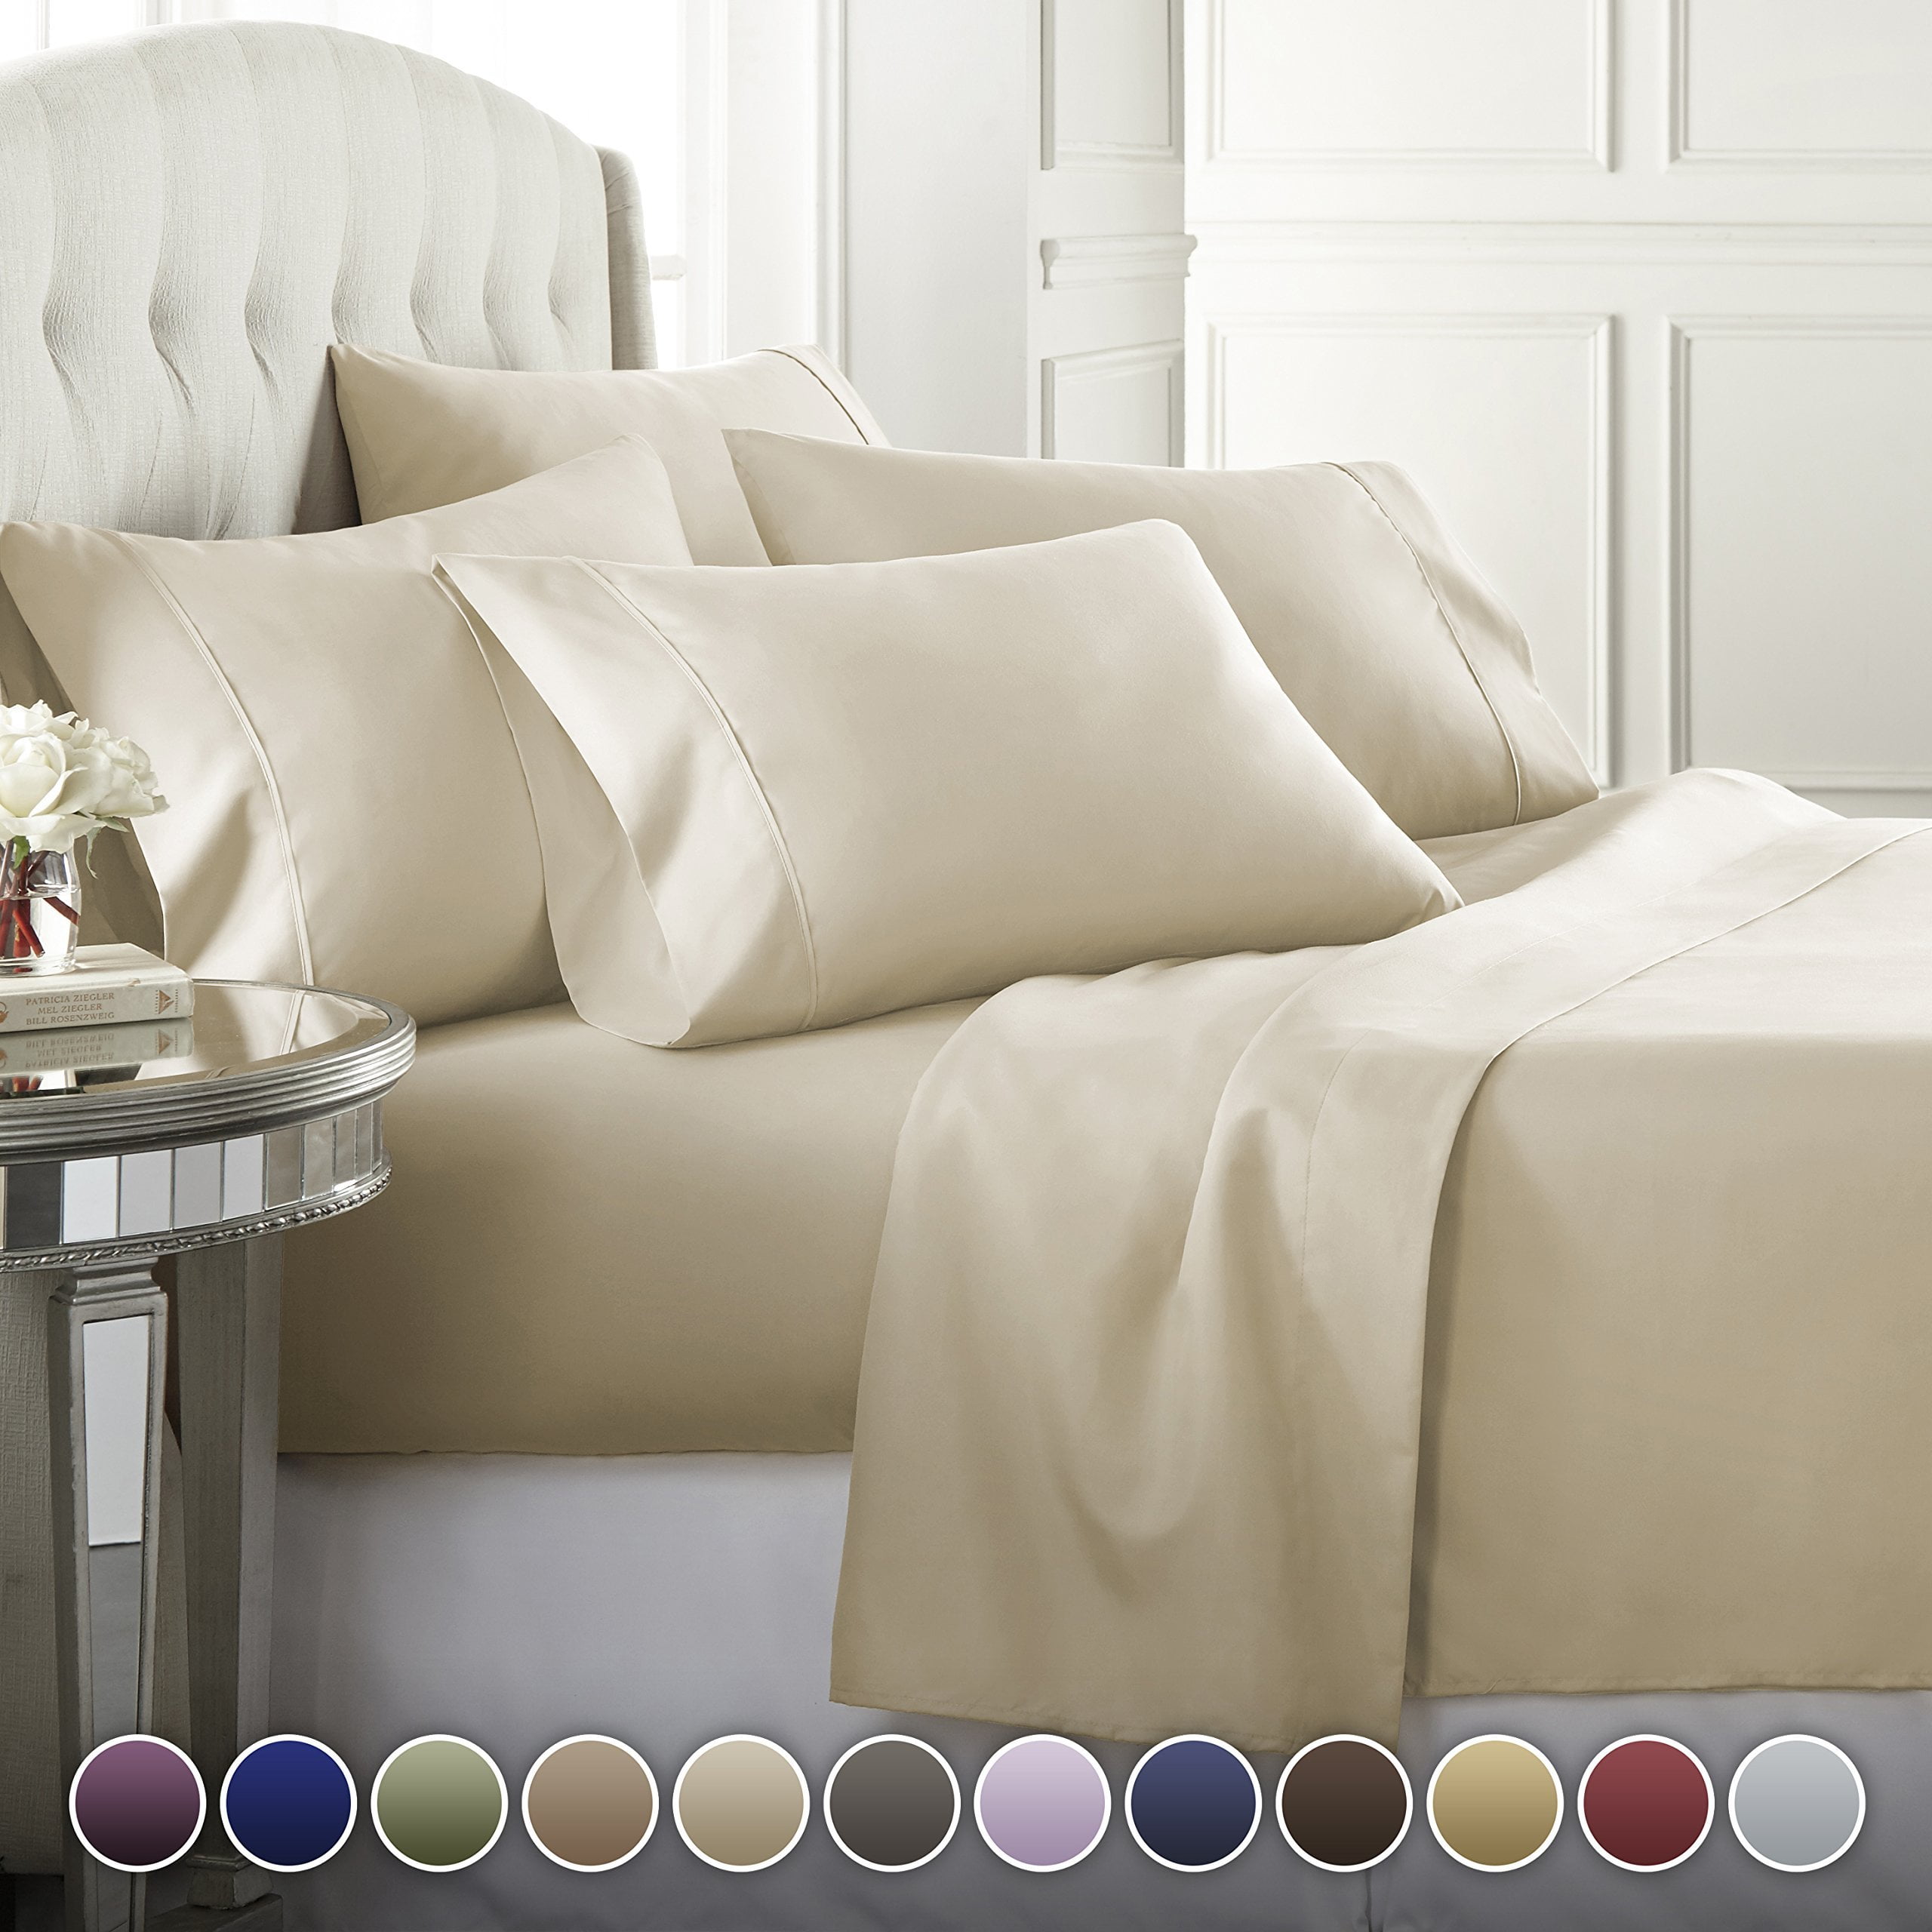 Details about   Beddingt Set Cotton Embroidery Mattress Cover Fitted Sheet Bed Sheet Pillowcase 